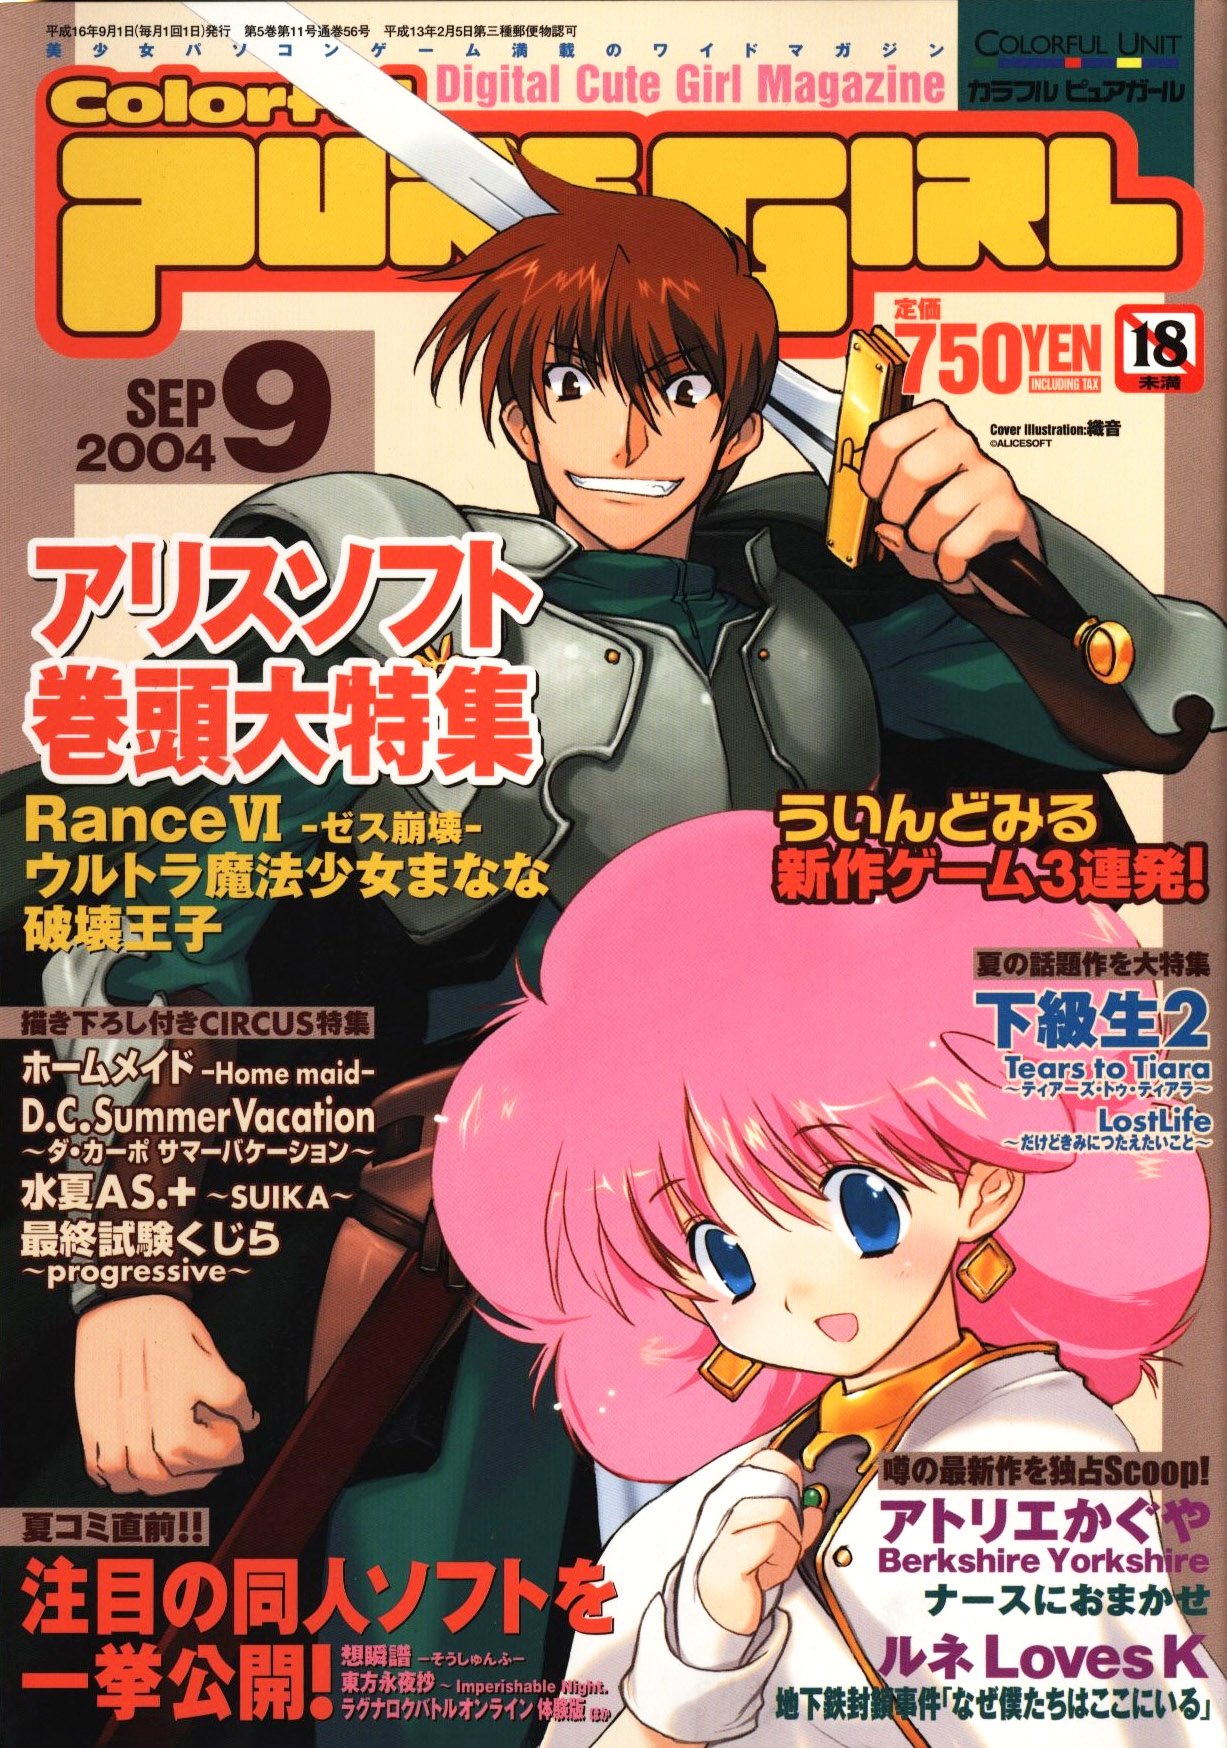 Colorful Puregirl Issue 56 (September 2004)